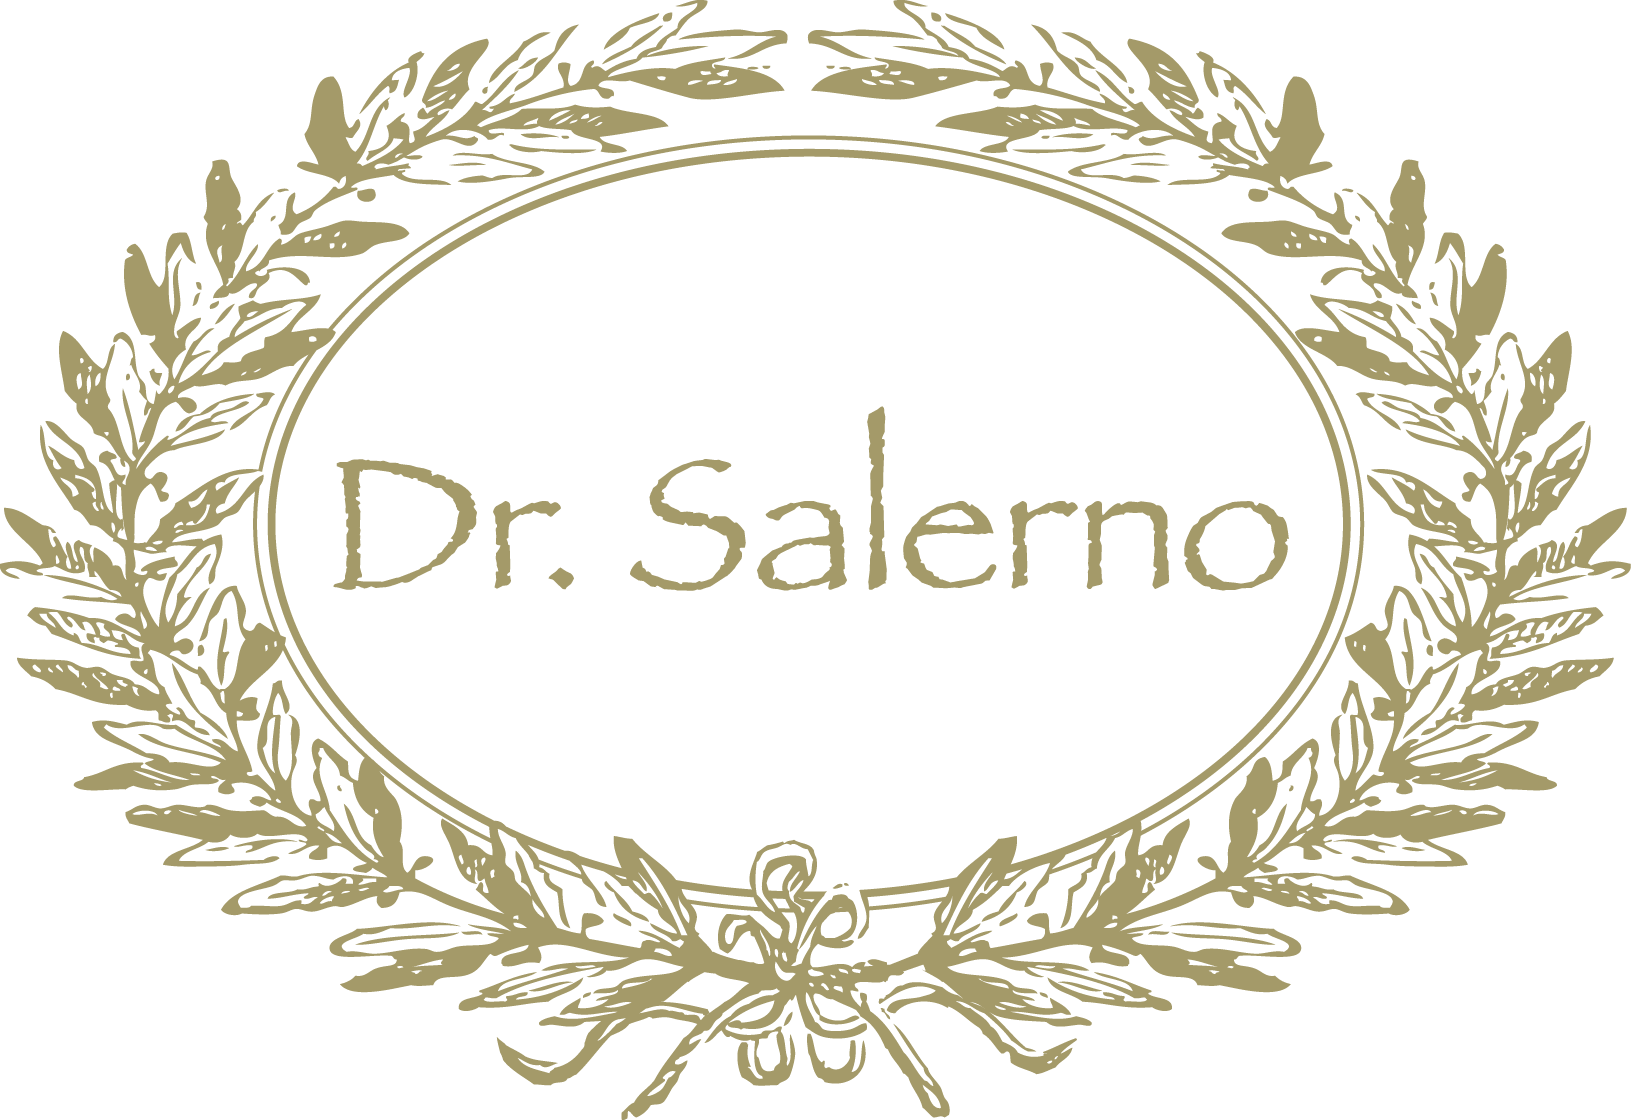 Dr. Salerno IVthera